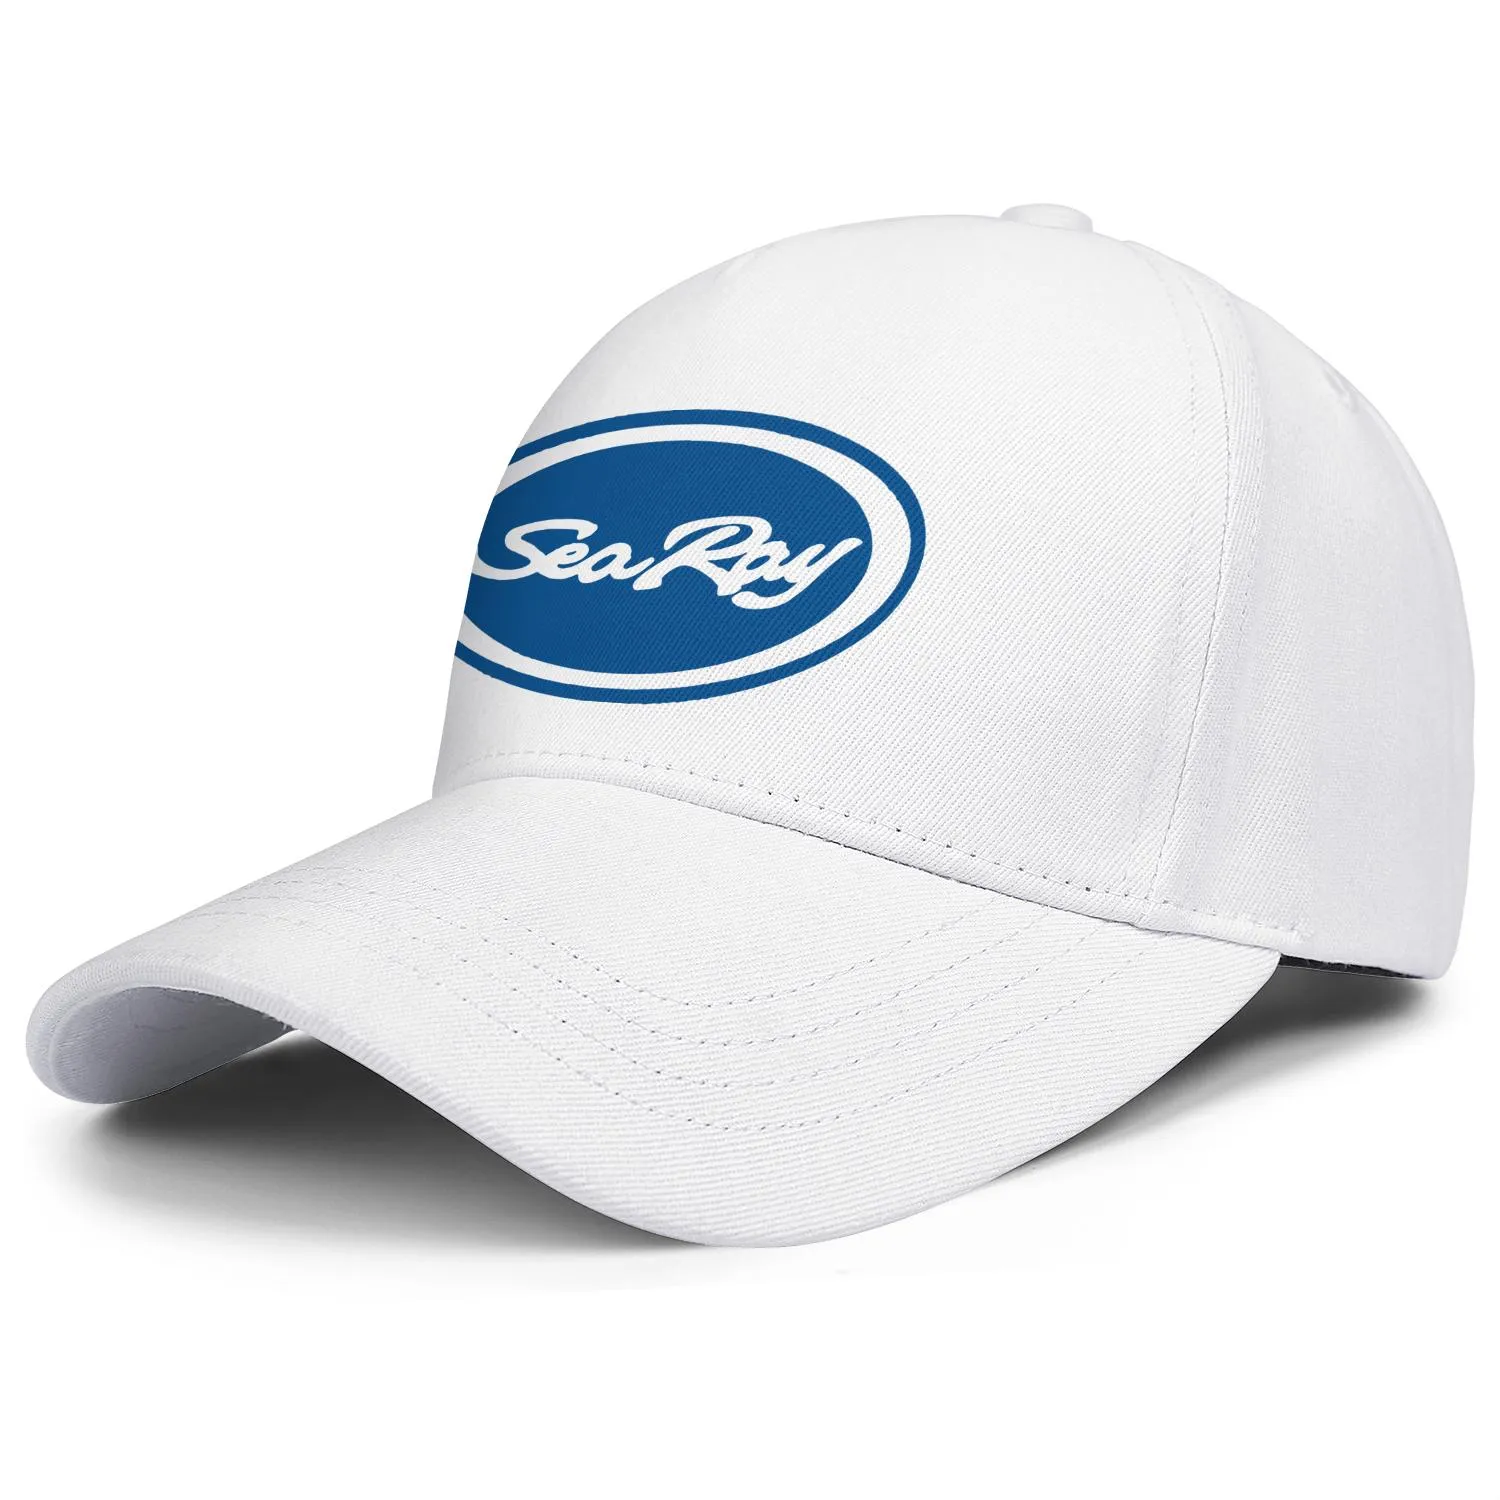 Fashion Sea Ray logo club Unisex Baseball Cap Vintage Original Trucke Hats white circle blue srw whites reds American flag Distres232e